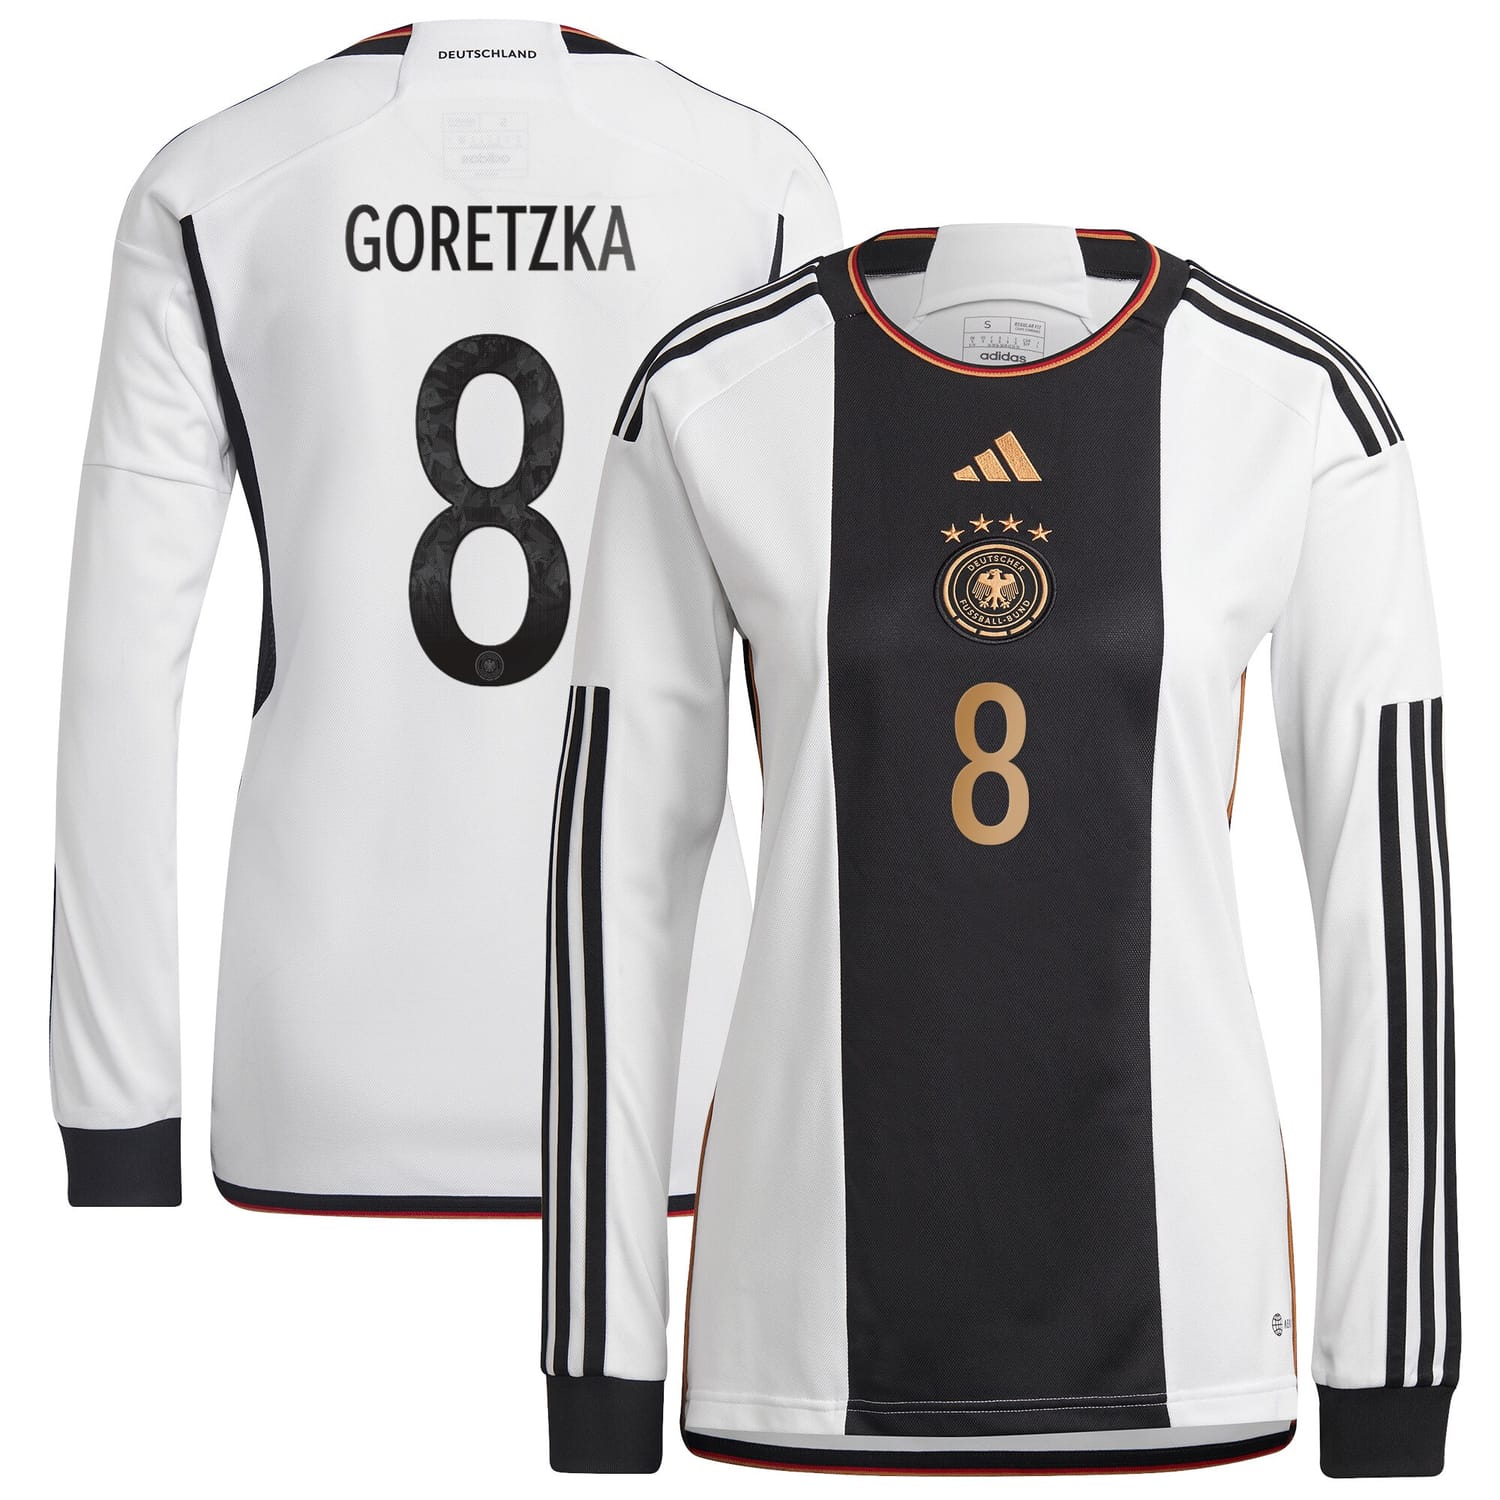 Germany National Team Home Jersey Shirt Long Sleeve player Leon Goretzka 8 printing for Women